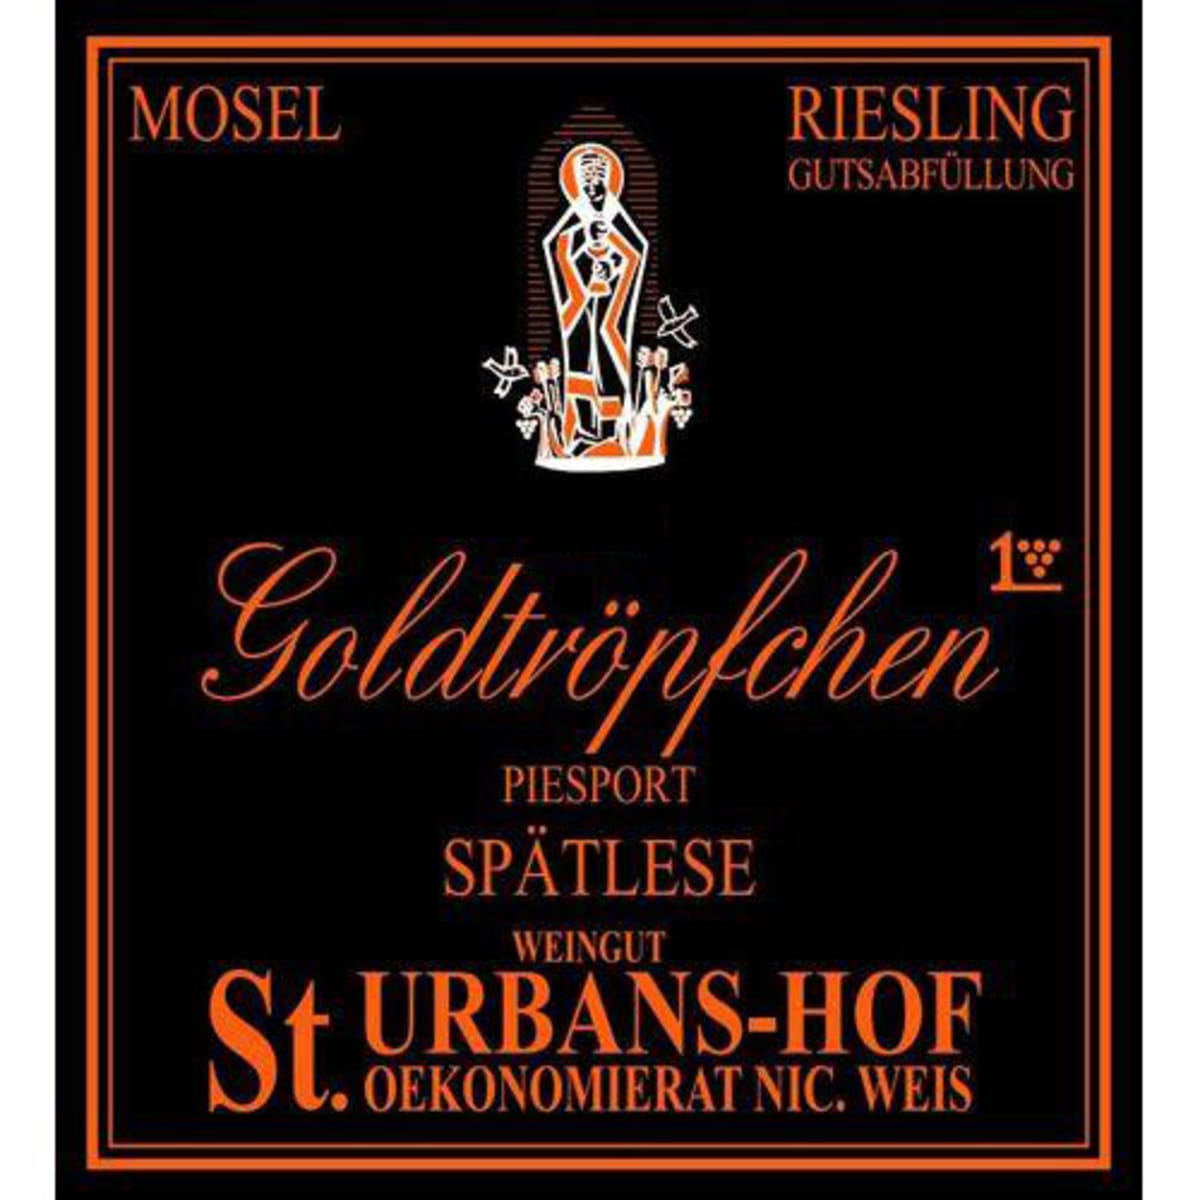 St. Urbans-Hof Piesporter Goldtropfchen Riesling Spatlese 2012 Front Label